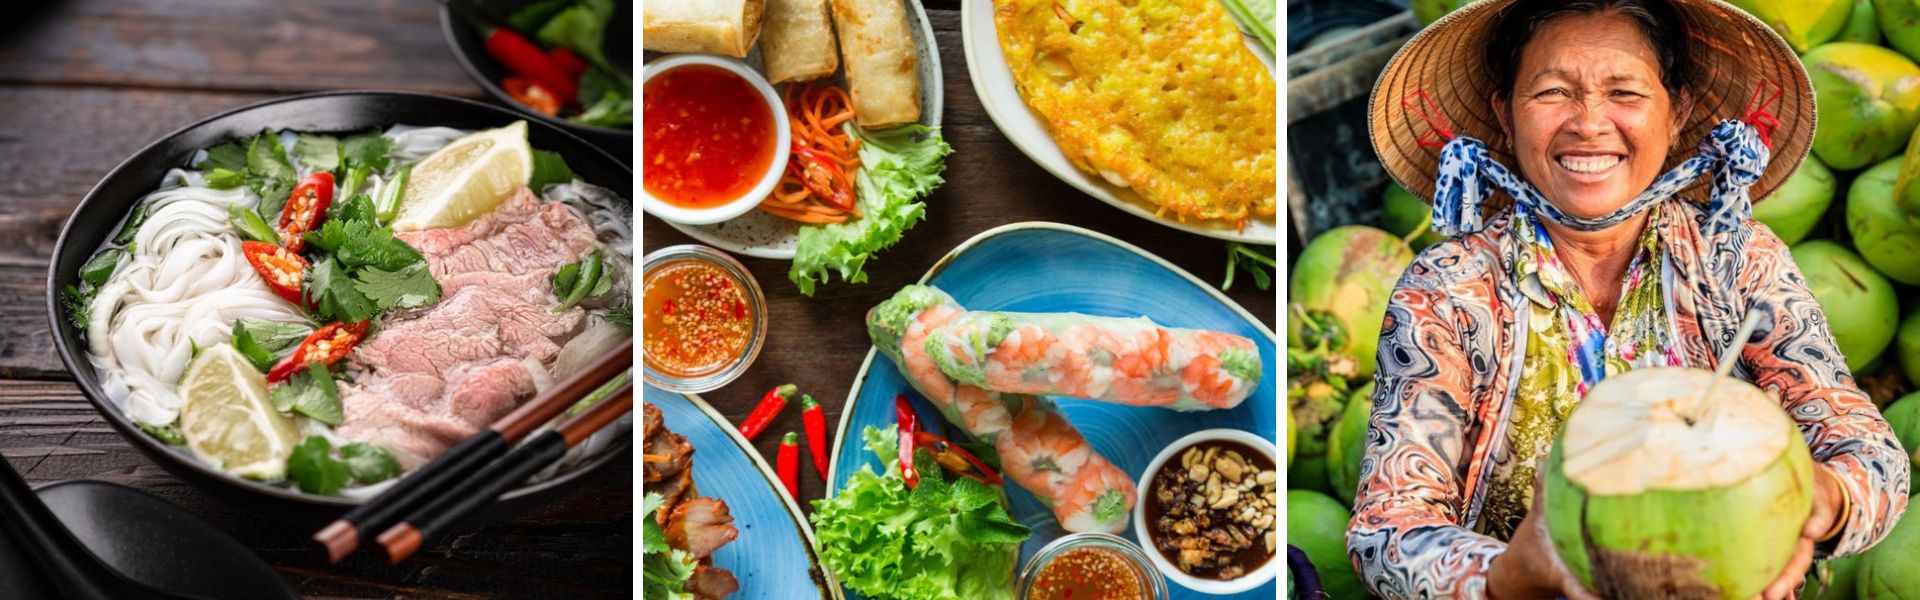 Gastronomia vietnamita